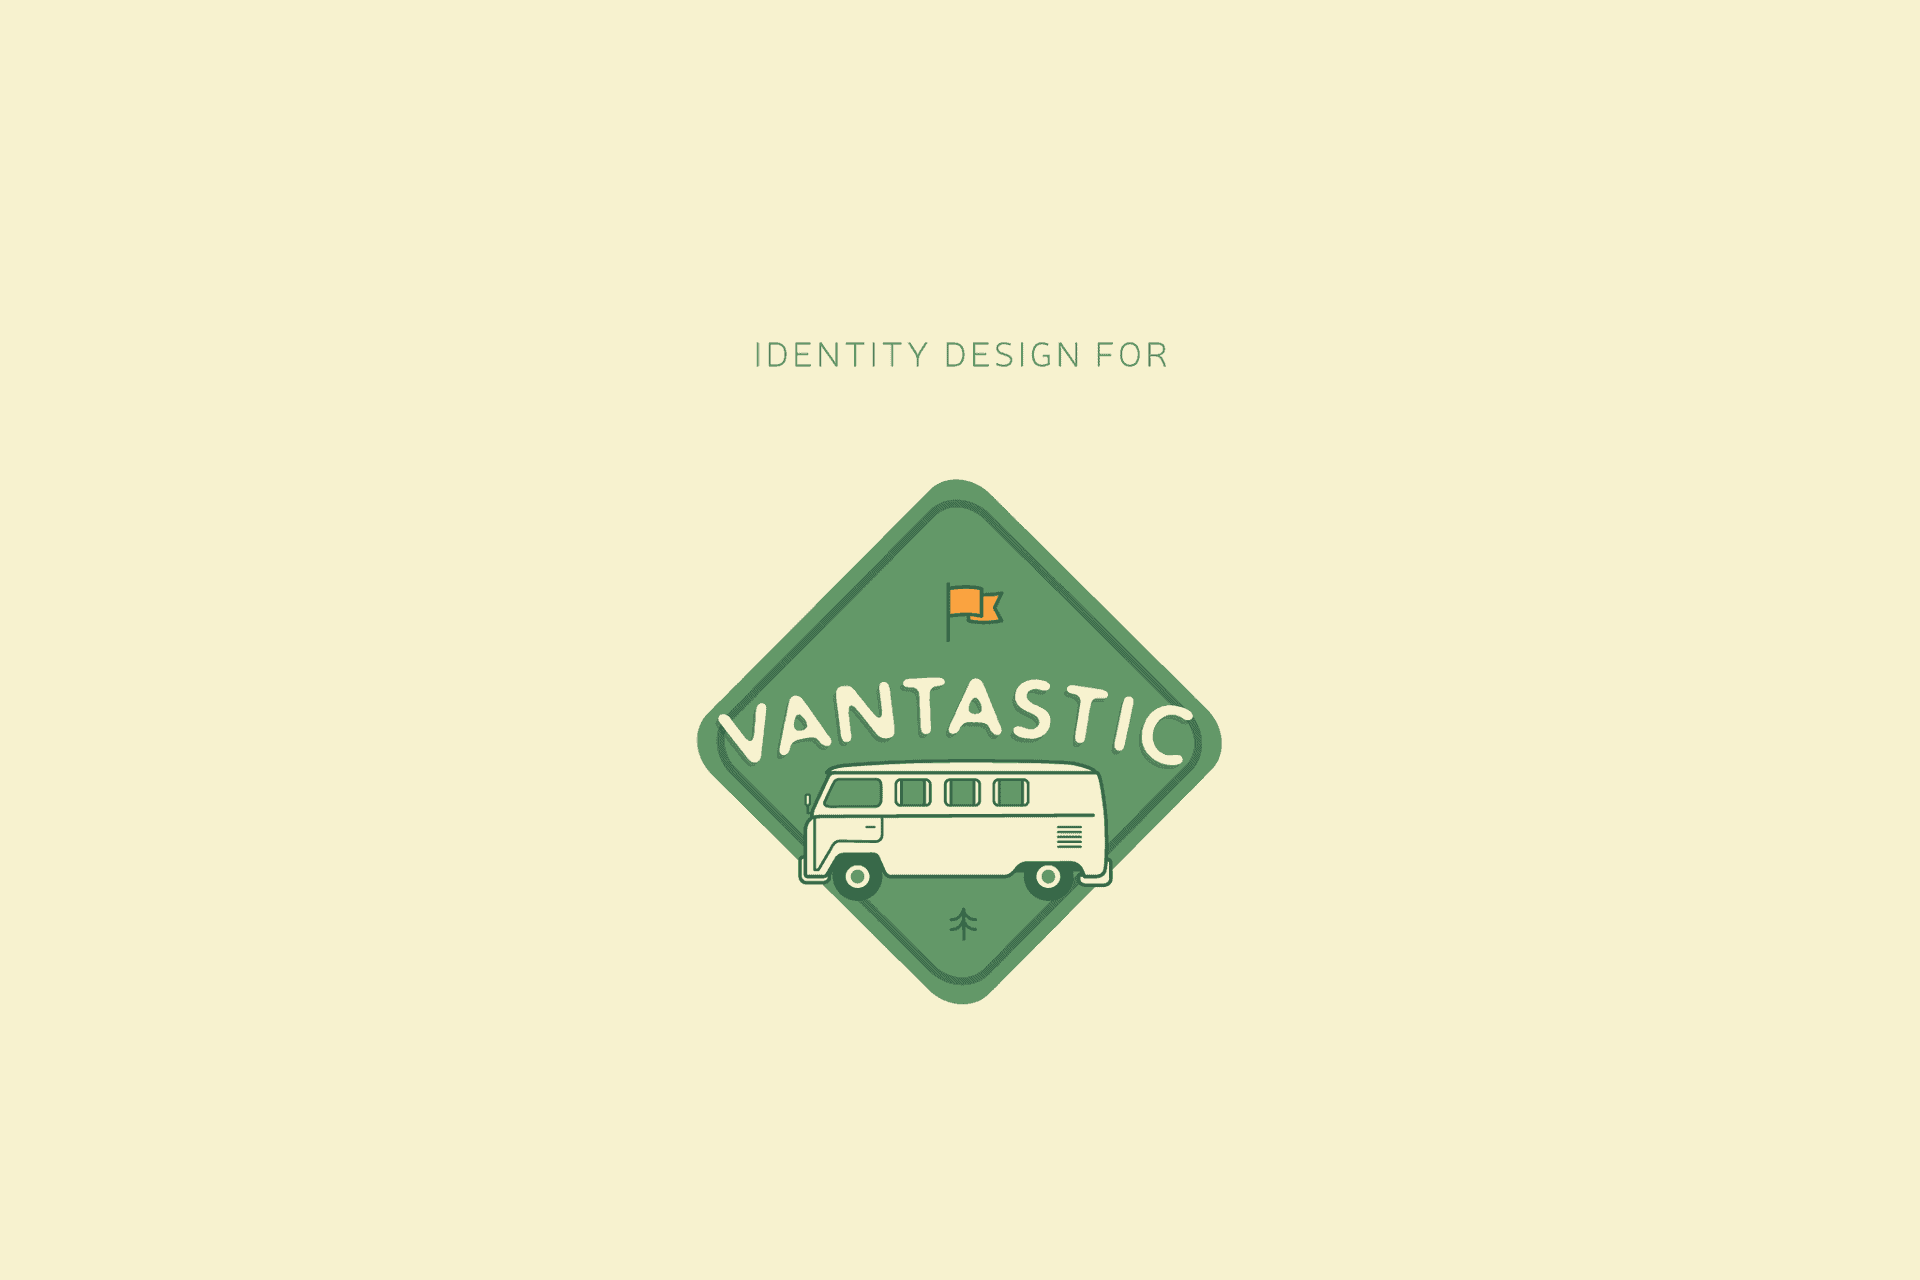 Identity design for Vantastic Diary